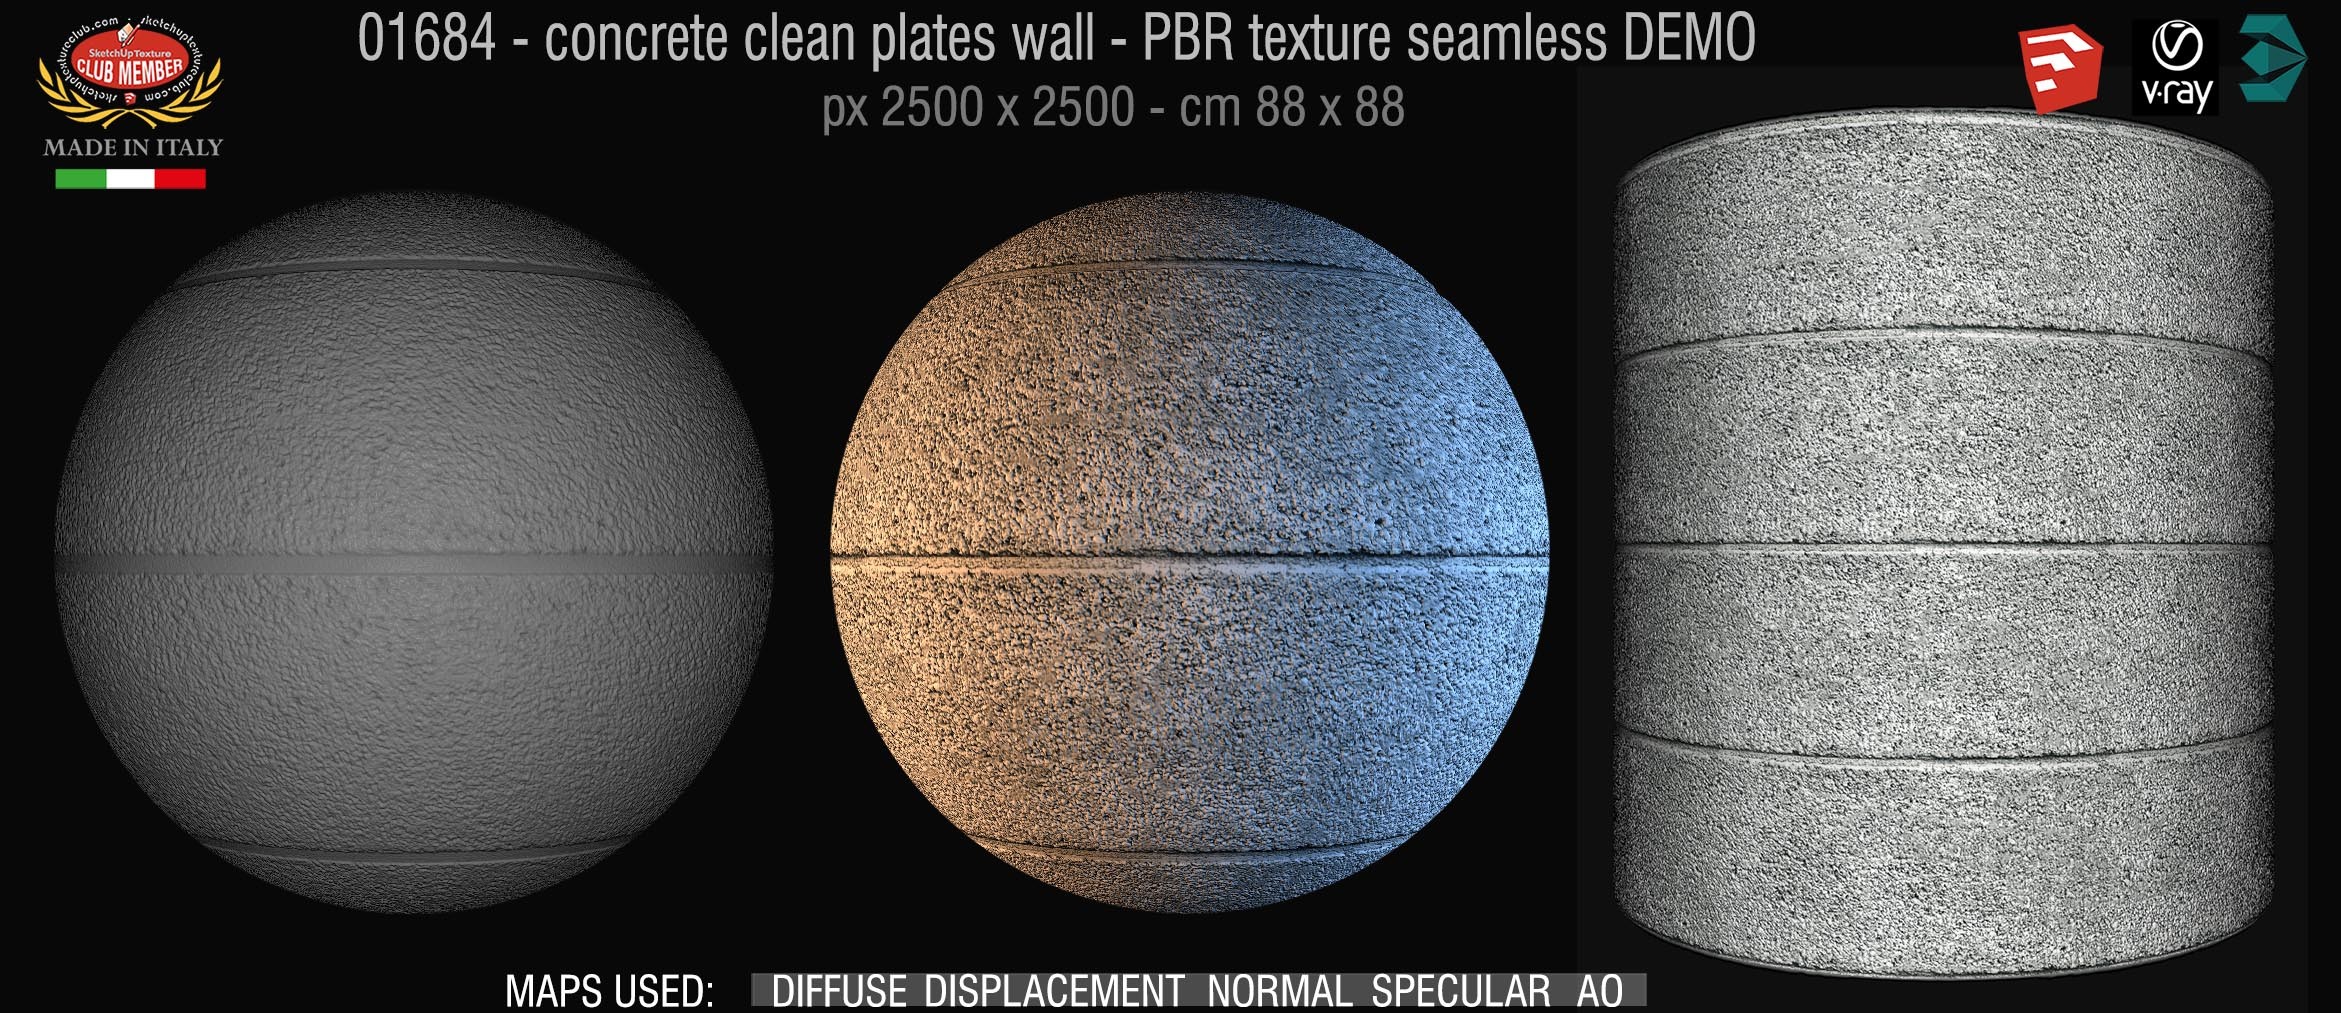 01684 concrete clean plates wall PBR texture seamless DEMO